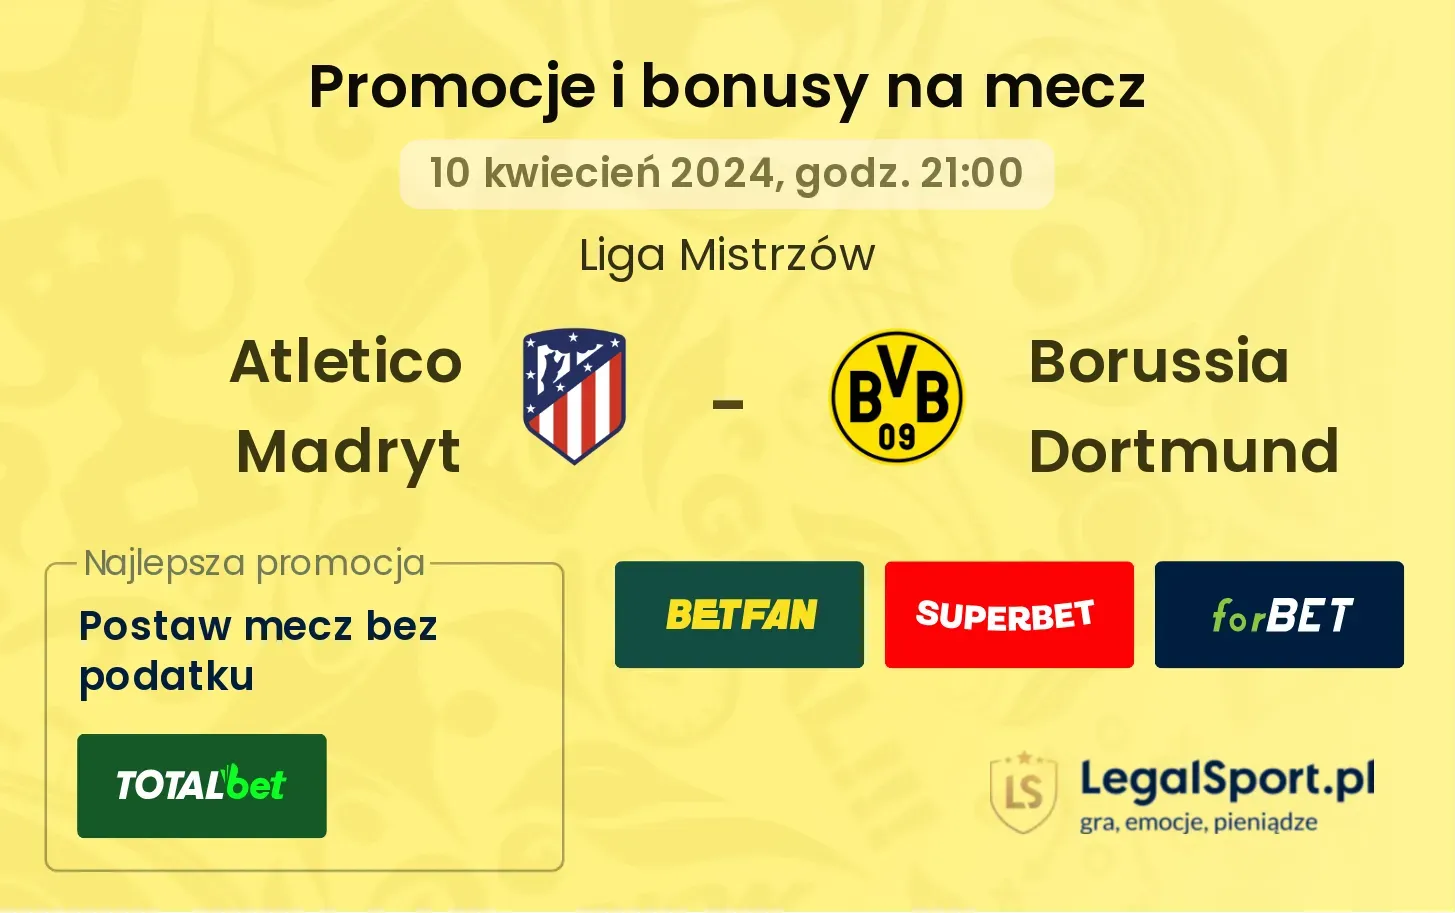 Atletico Madryt - Borussia Dortmund promocje bonusy na mecz